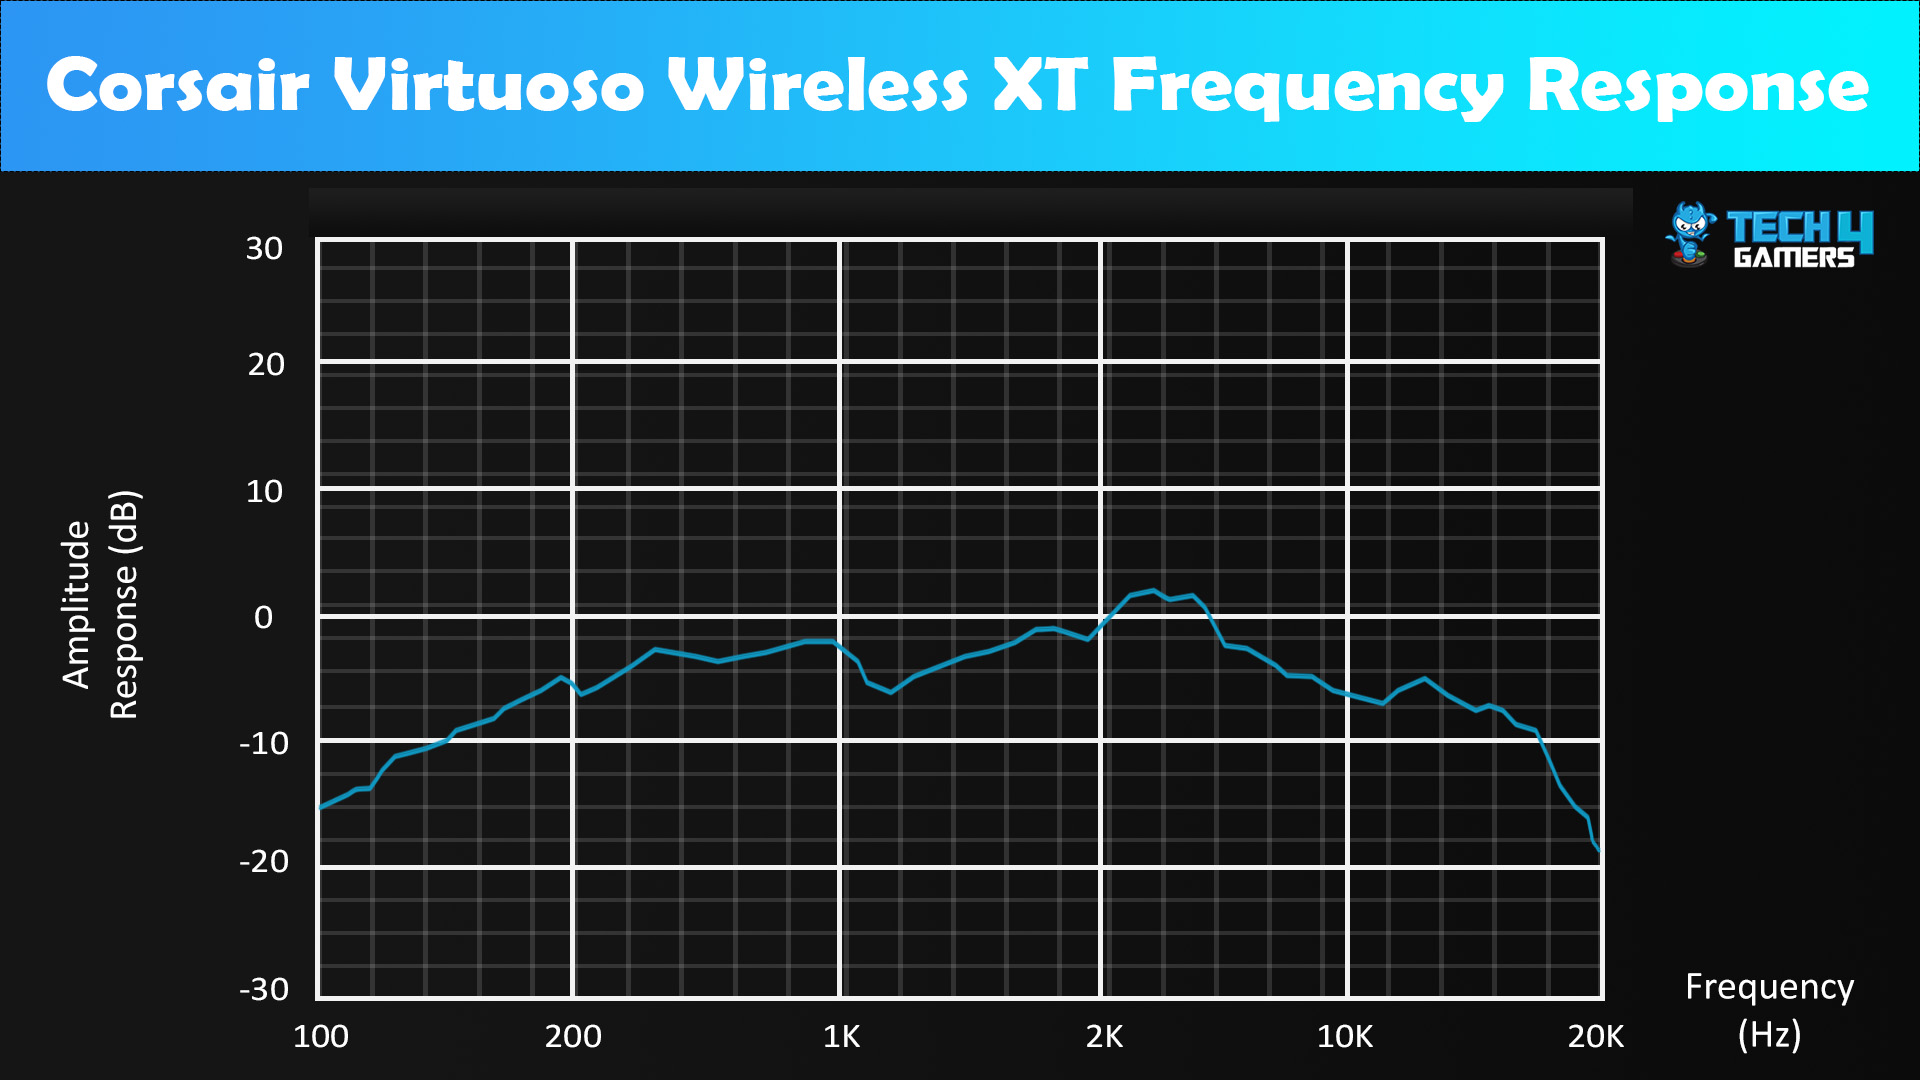 Corsair Virtuoso Wireless XT - Frequency Response